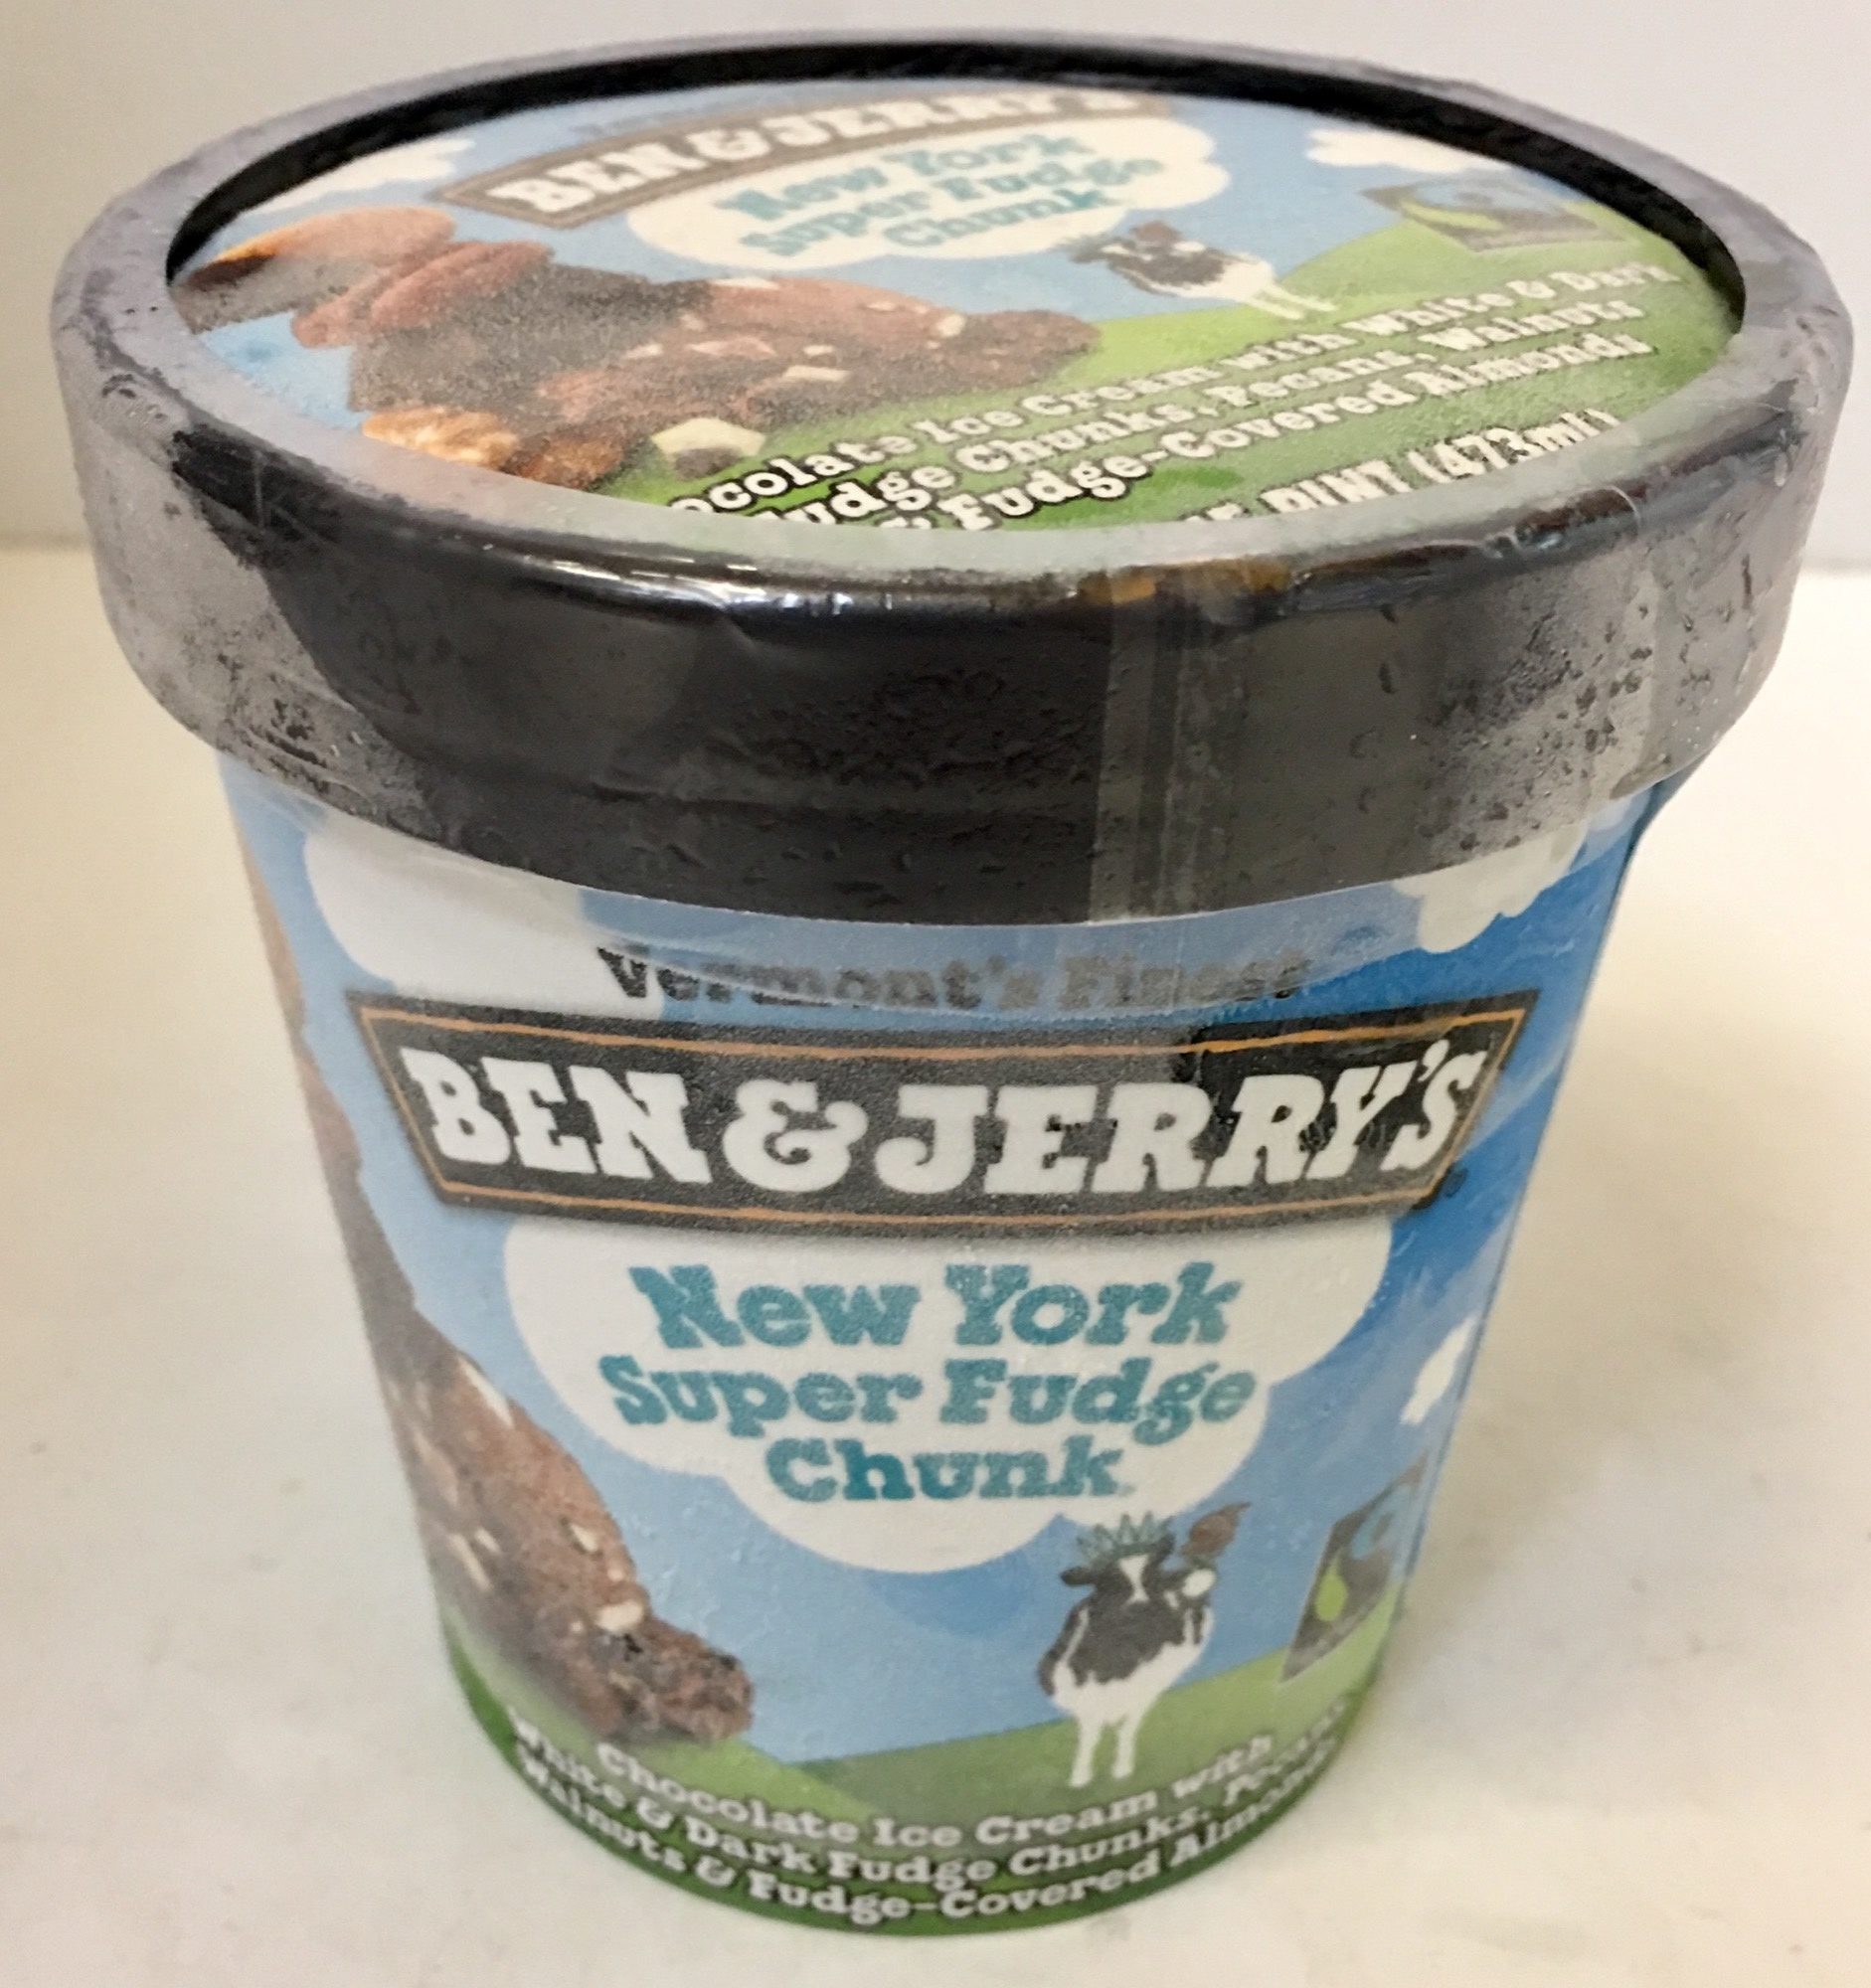 New york super fudge chunk chocolate ice cream with white & dark fudge chunks, pecans, walnuts & fudge-covered almonds, new york super fudge chunk - Product - en